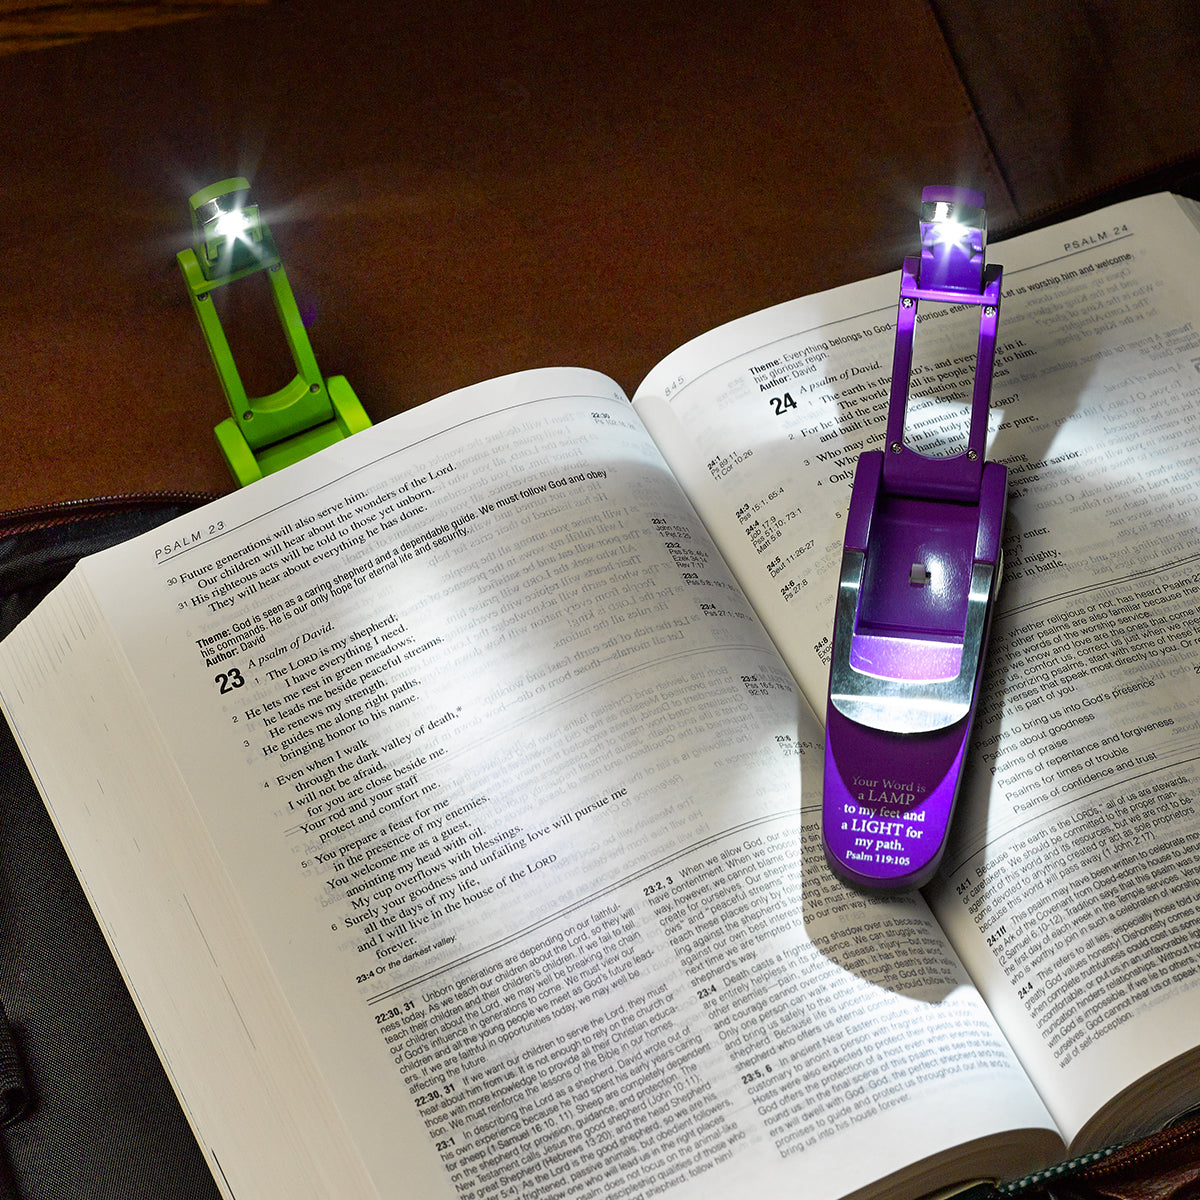 Purple Hydraulic Pop-Up Book Light – Psalm 119:105 - The Christian Gift Company